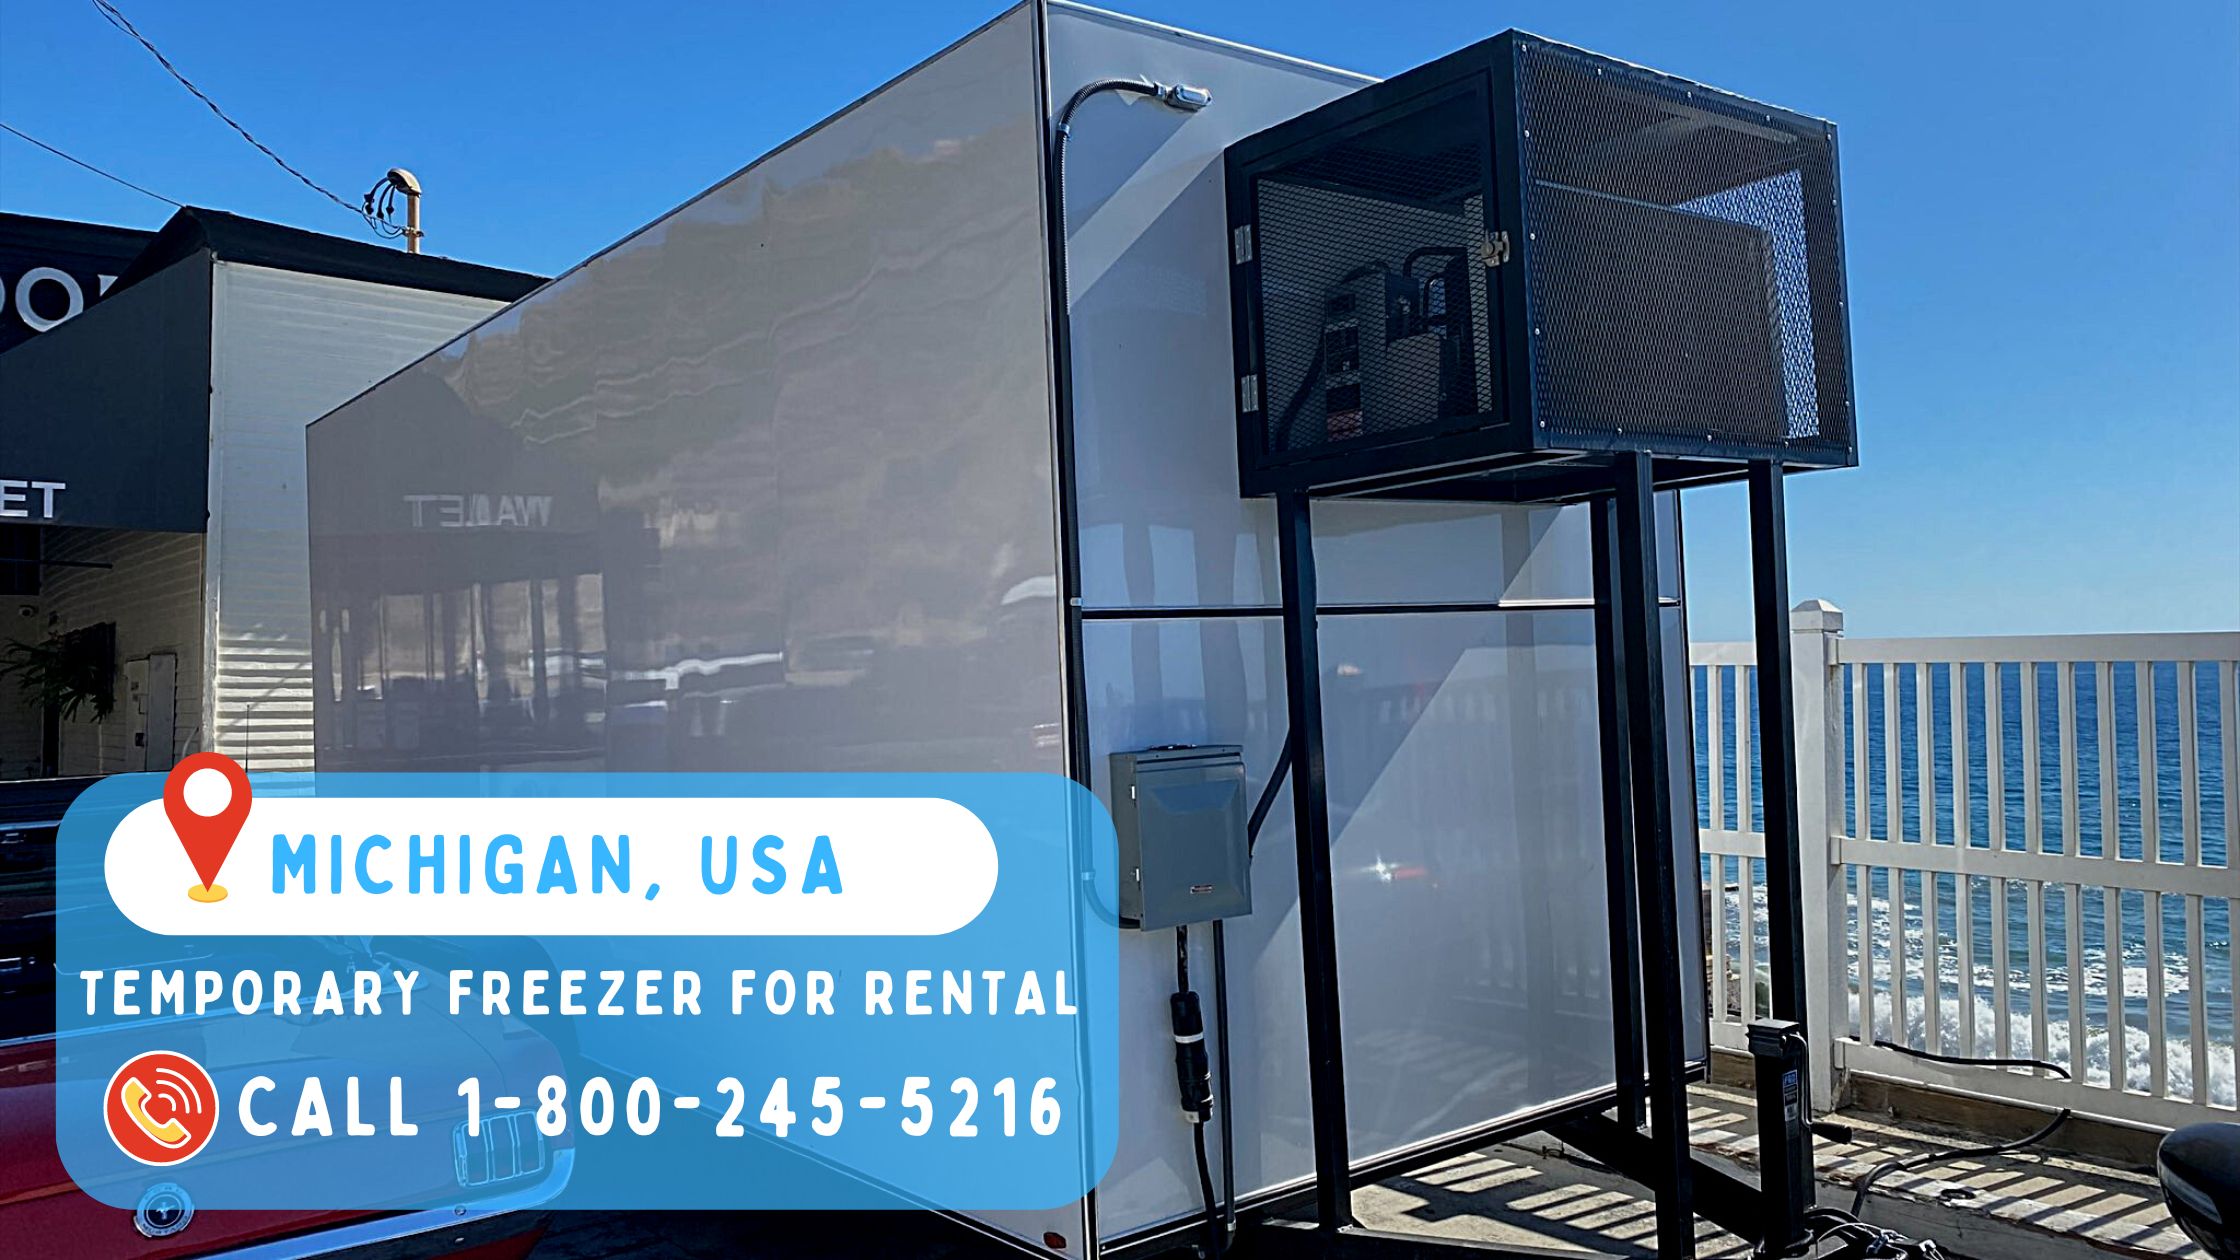 Temporary freezer for rental in Michigan